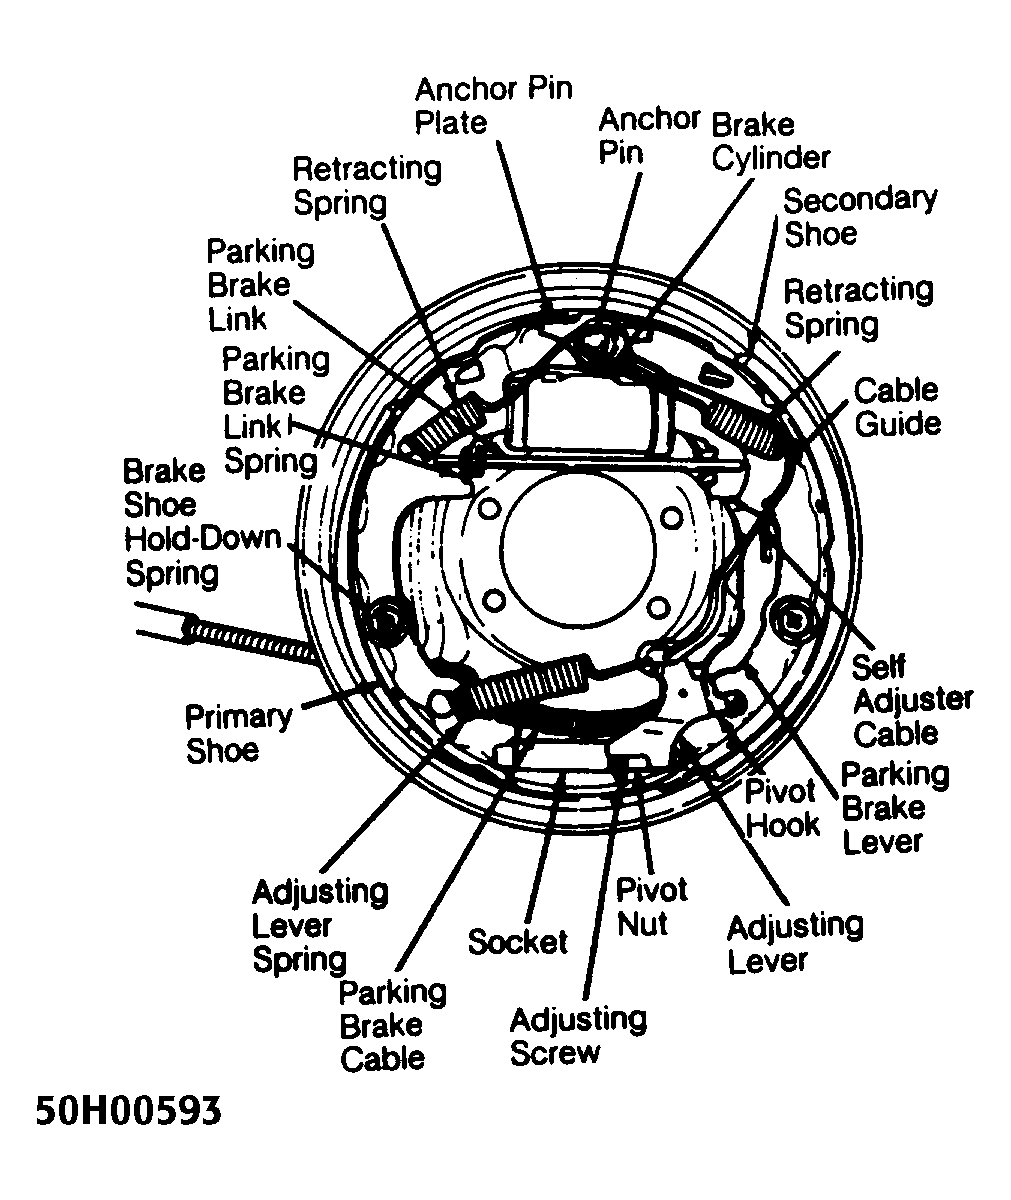 1999 Ford Ranger Wiring Diagram from lh6.googleusercontent.com